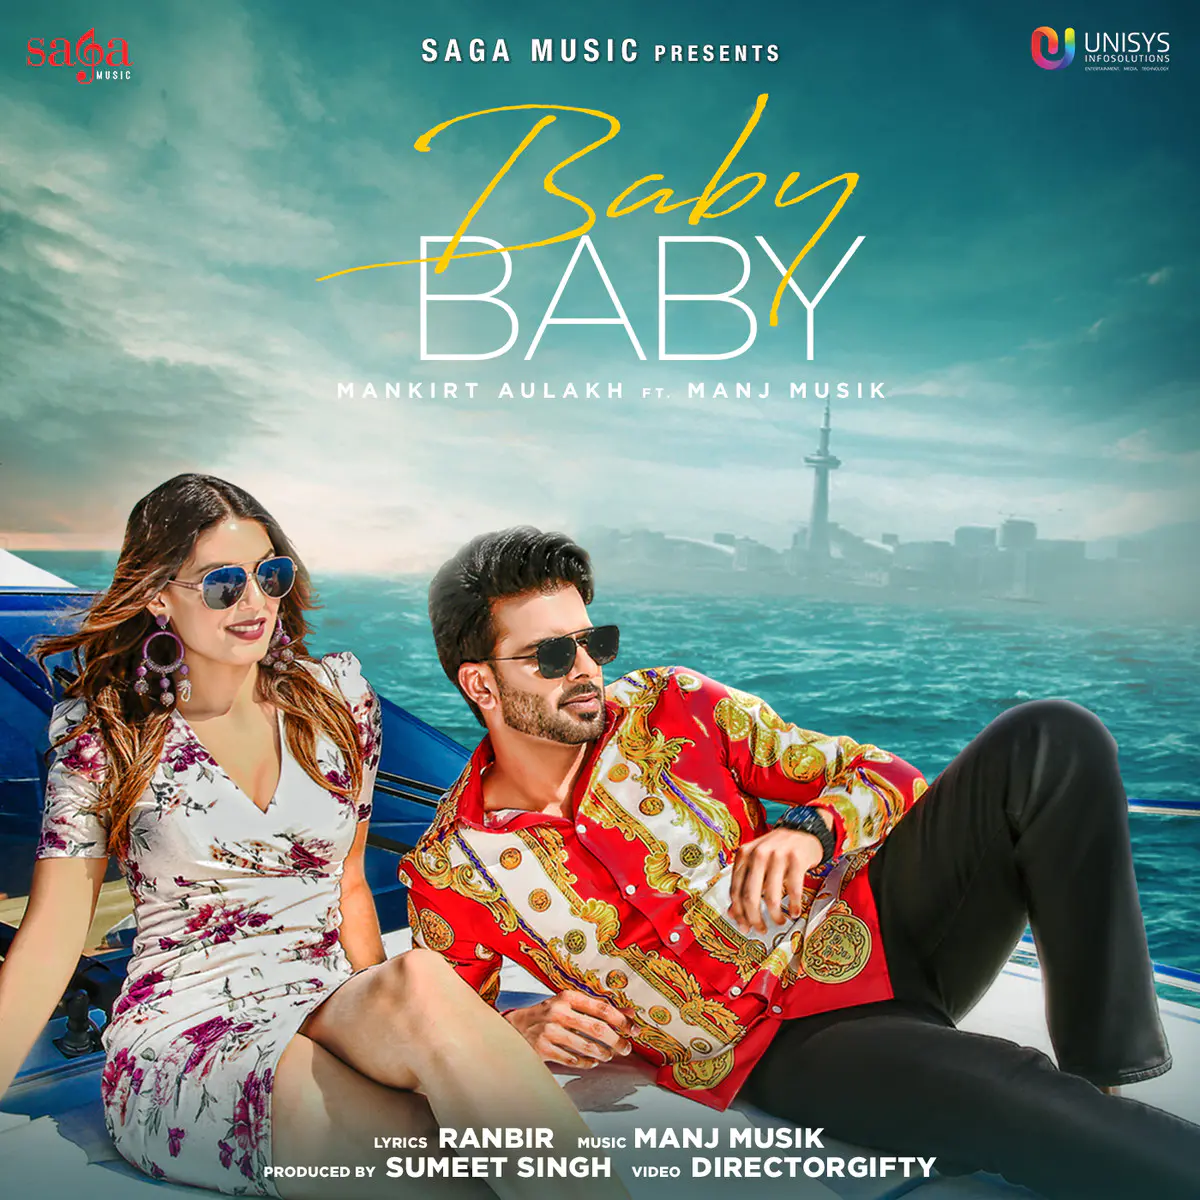 Baby Baby Lyrics In Punjabi Baby Baby Baby Baby Song Lyrics In English Free Online On Gaana Com